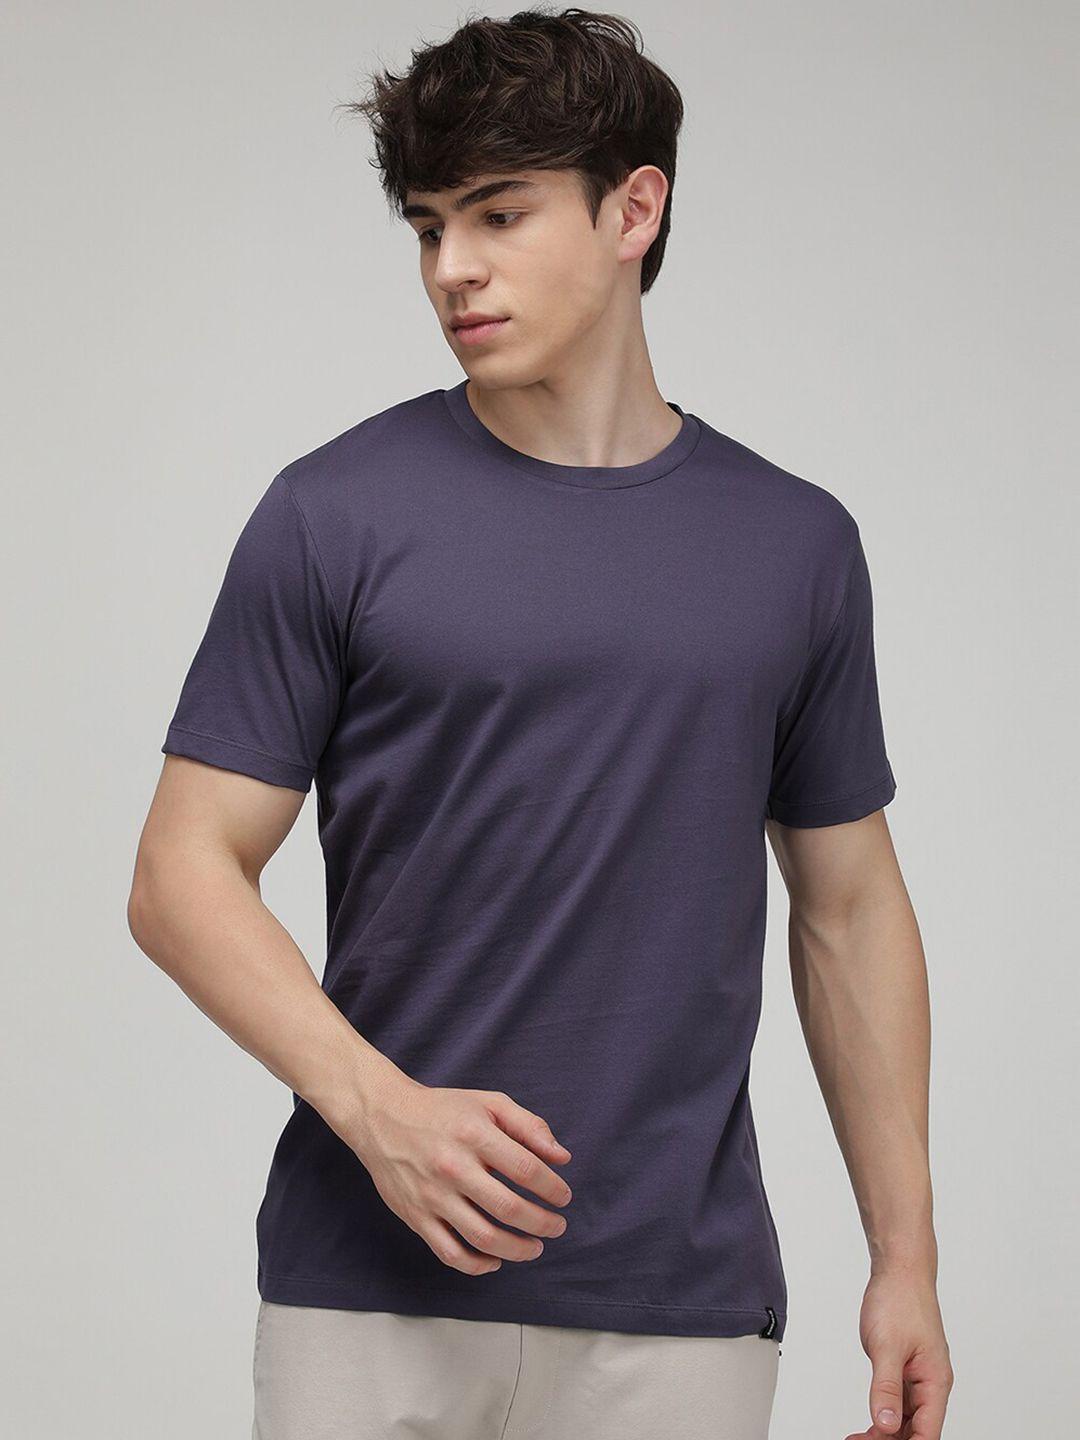 sporto soft durable breathable everfresh cotton t-shirt